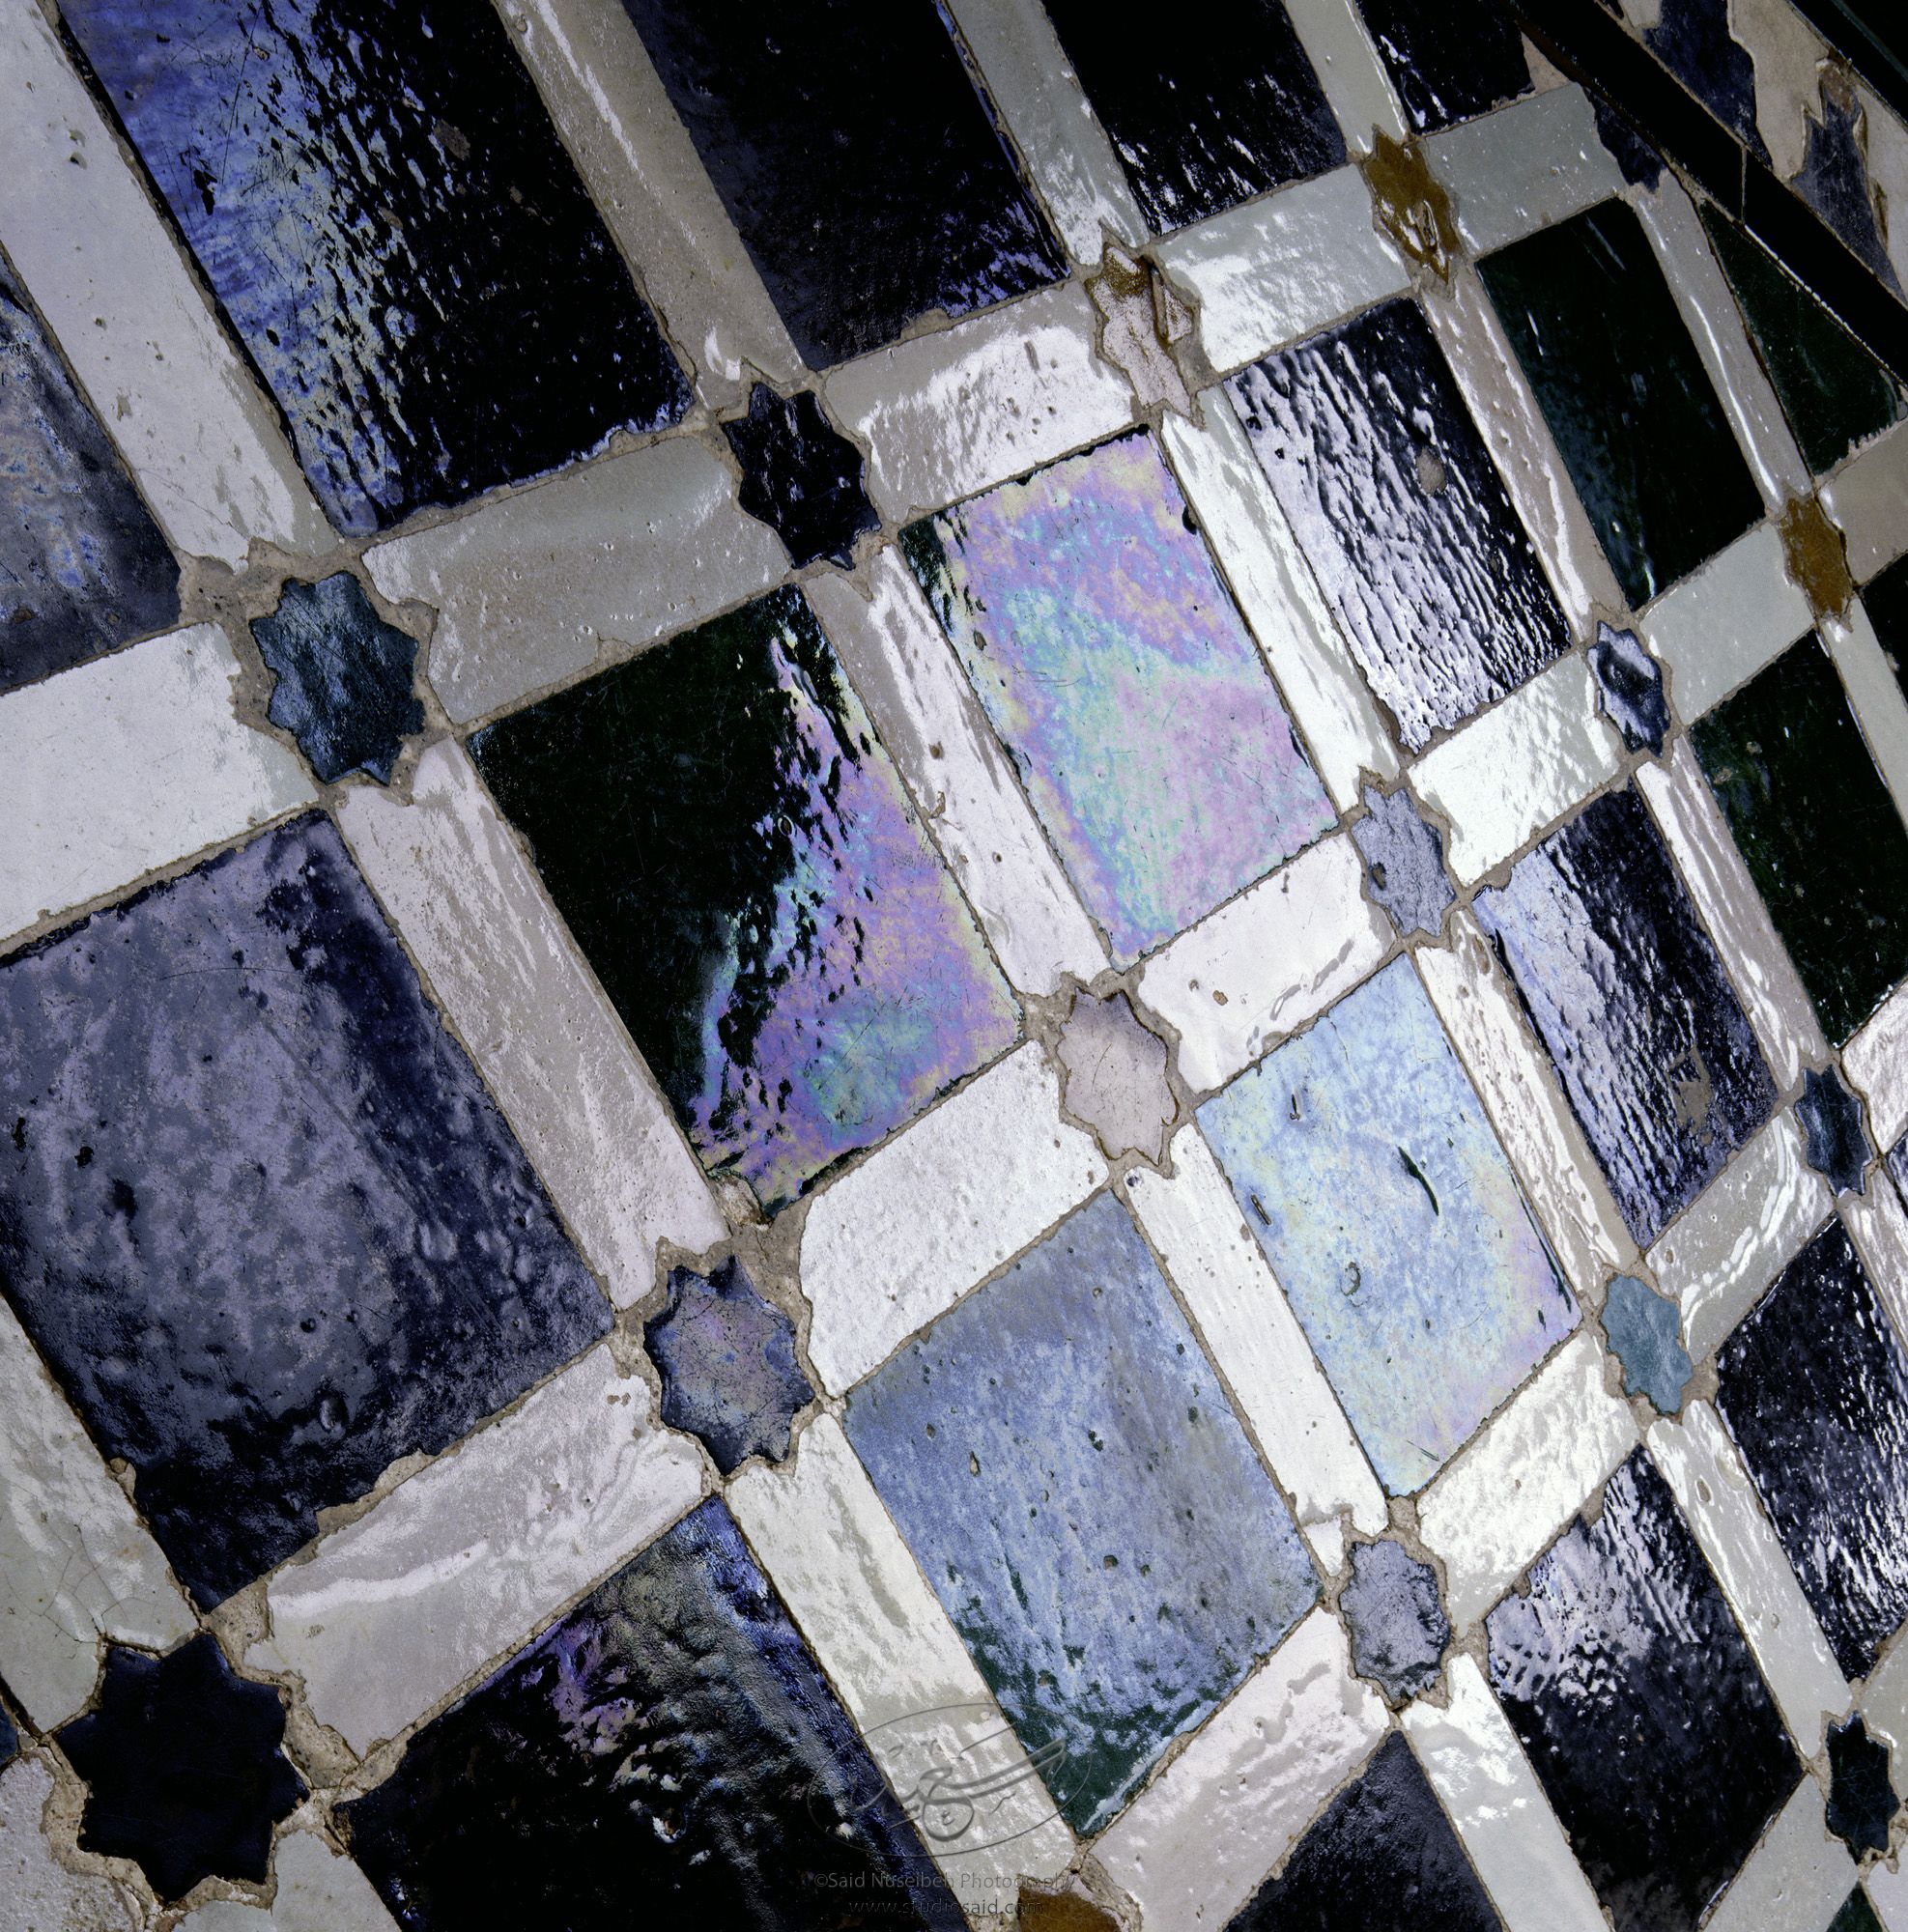 Sala de Cuarto del Dorado, Alhambra, Granada, Espa&ntilde;a. Image of iridescence off the glazed tiles of dados inside the Alhambra, a palace of the Nasrid dynasty in 12<sup>th</sup>&ndash;century Andaluc&igrave;a, Granada, Spain.